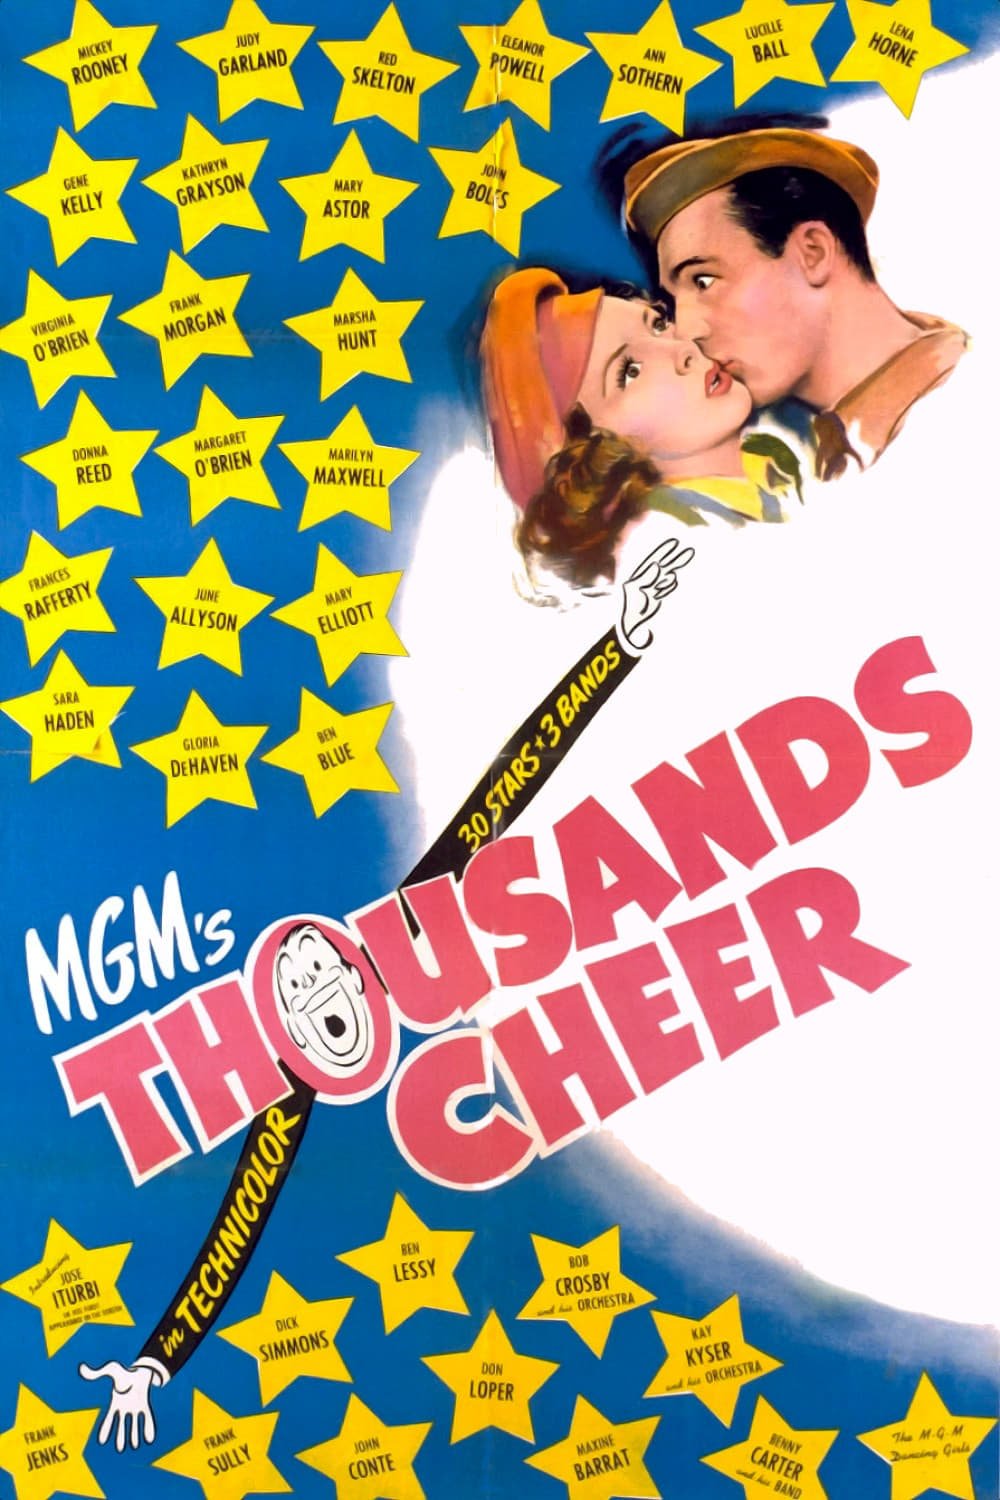 Thousands Cheer (1943)